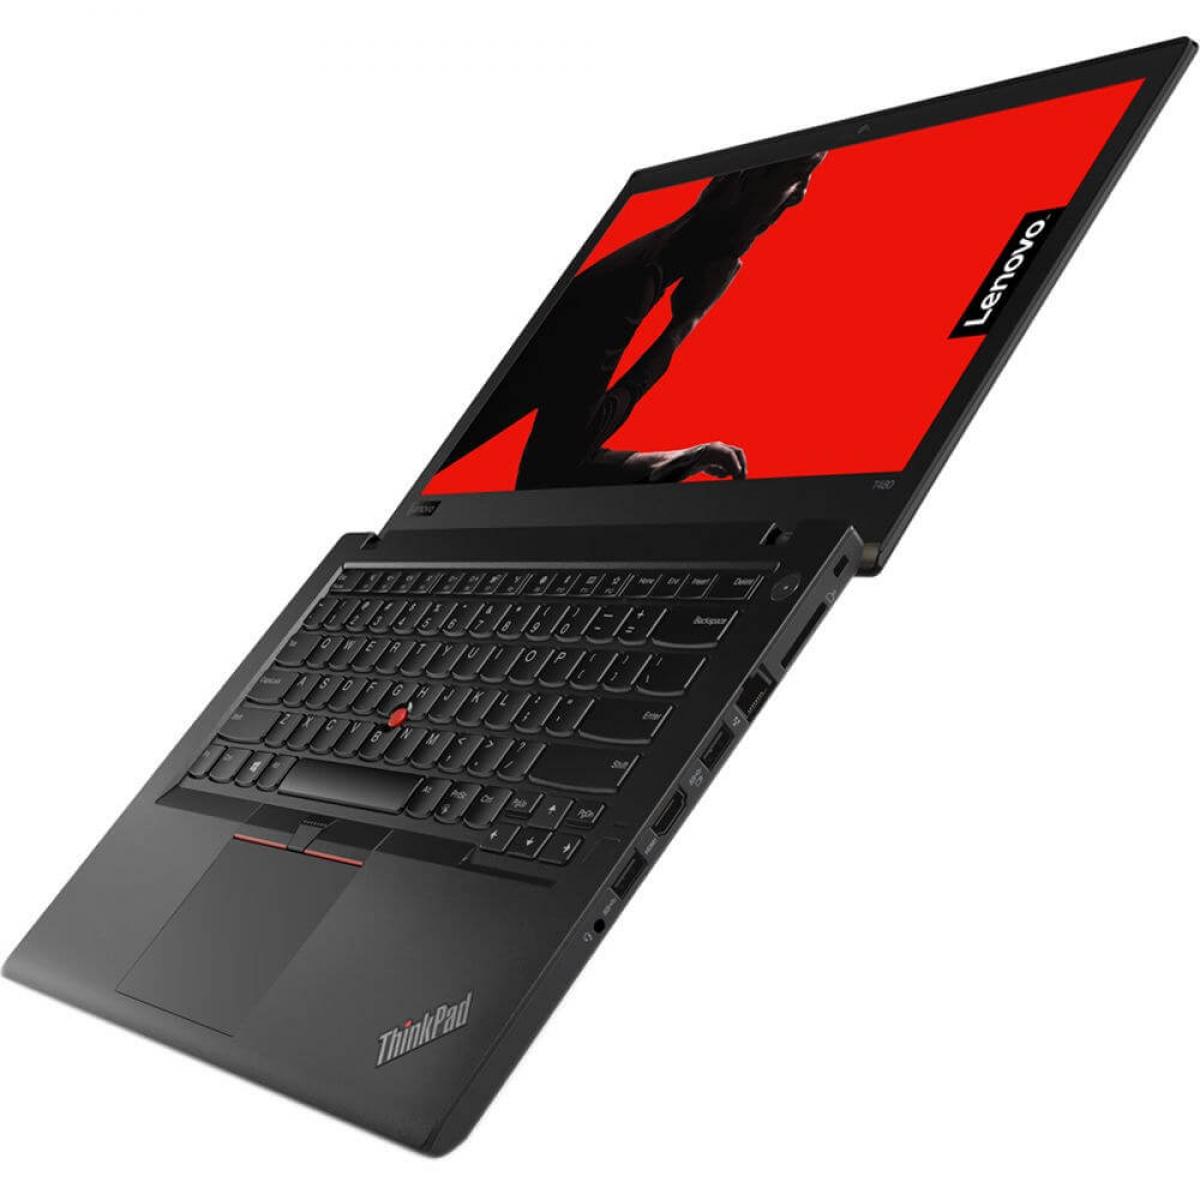 Lenovo ThinkPad T490 Notebook, Intel Core i78565U CPU, 16GB RAM, 512GB SSD, 14